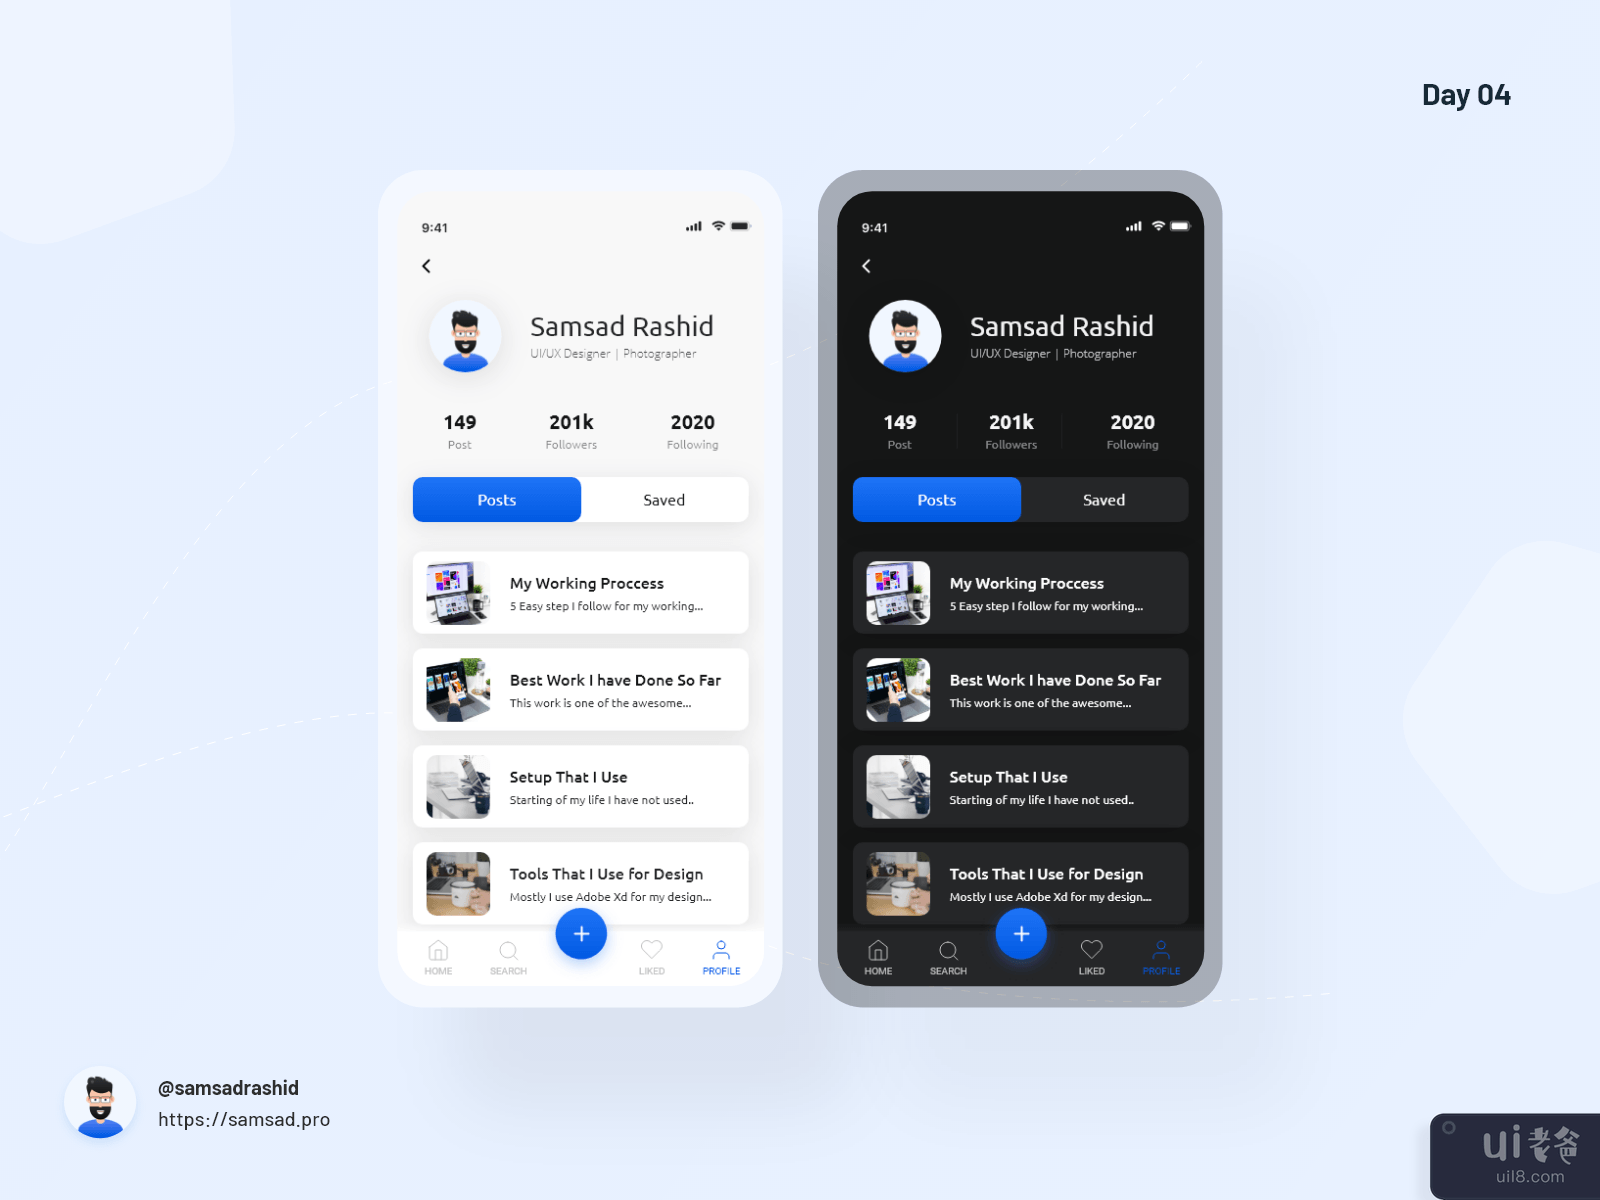 App Design Profile Screen